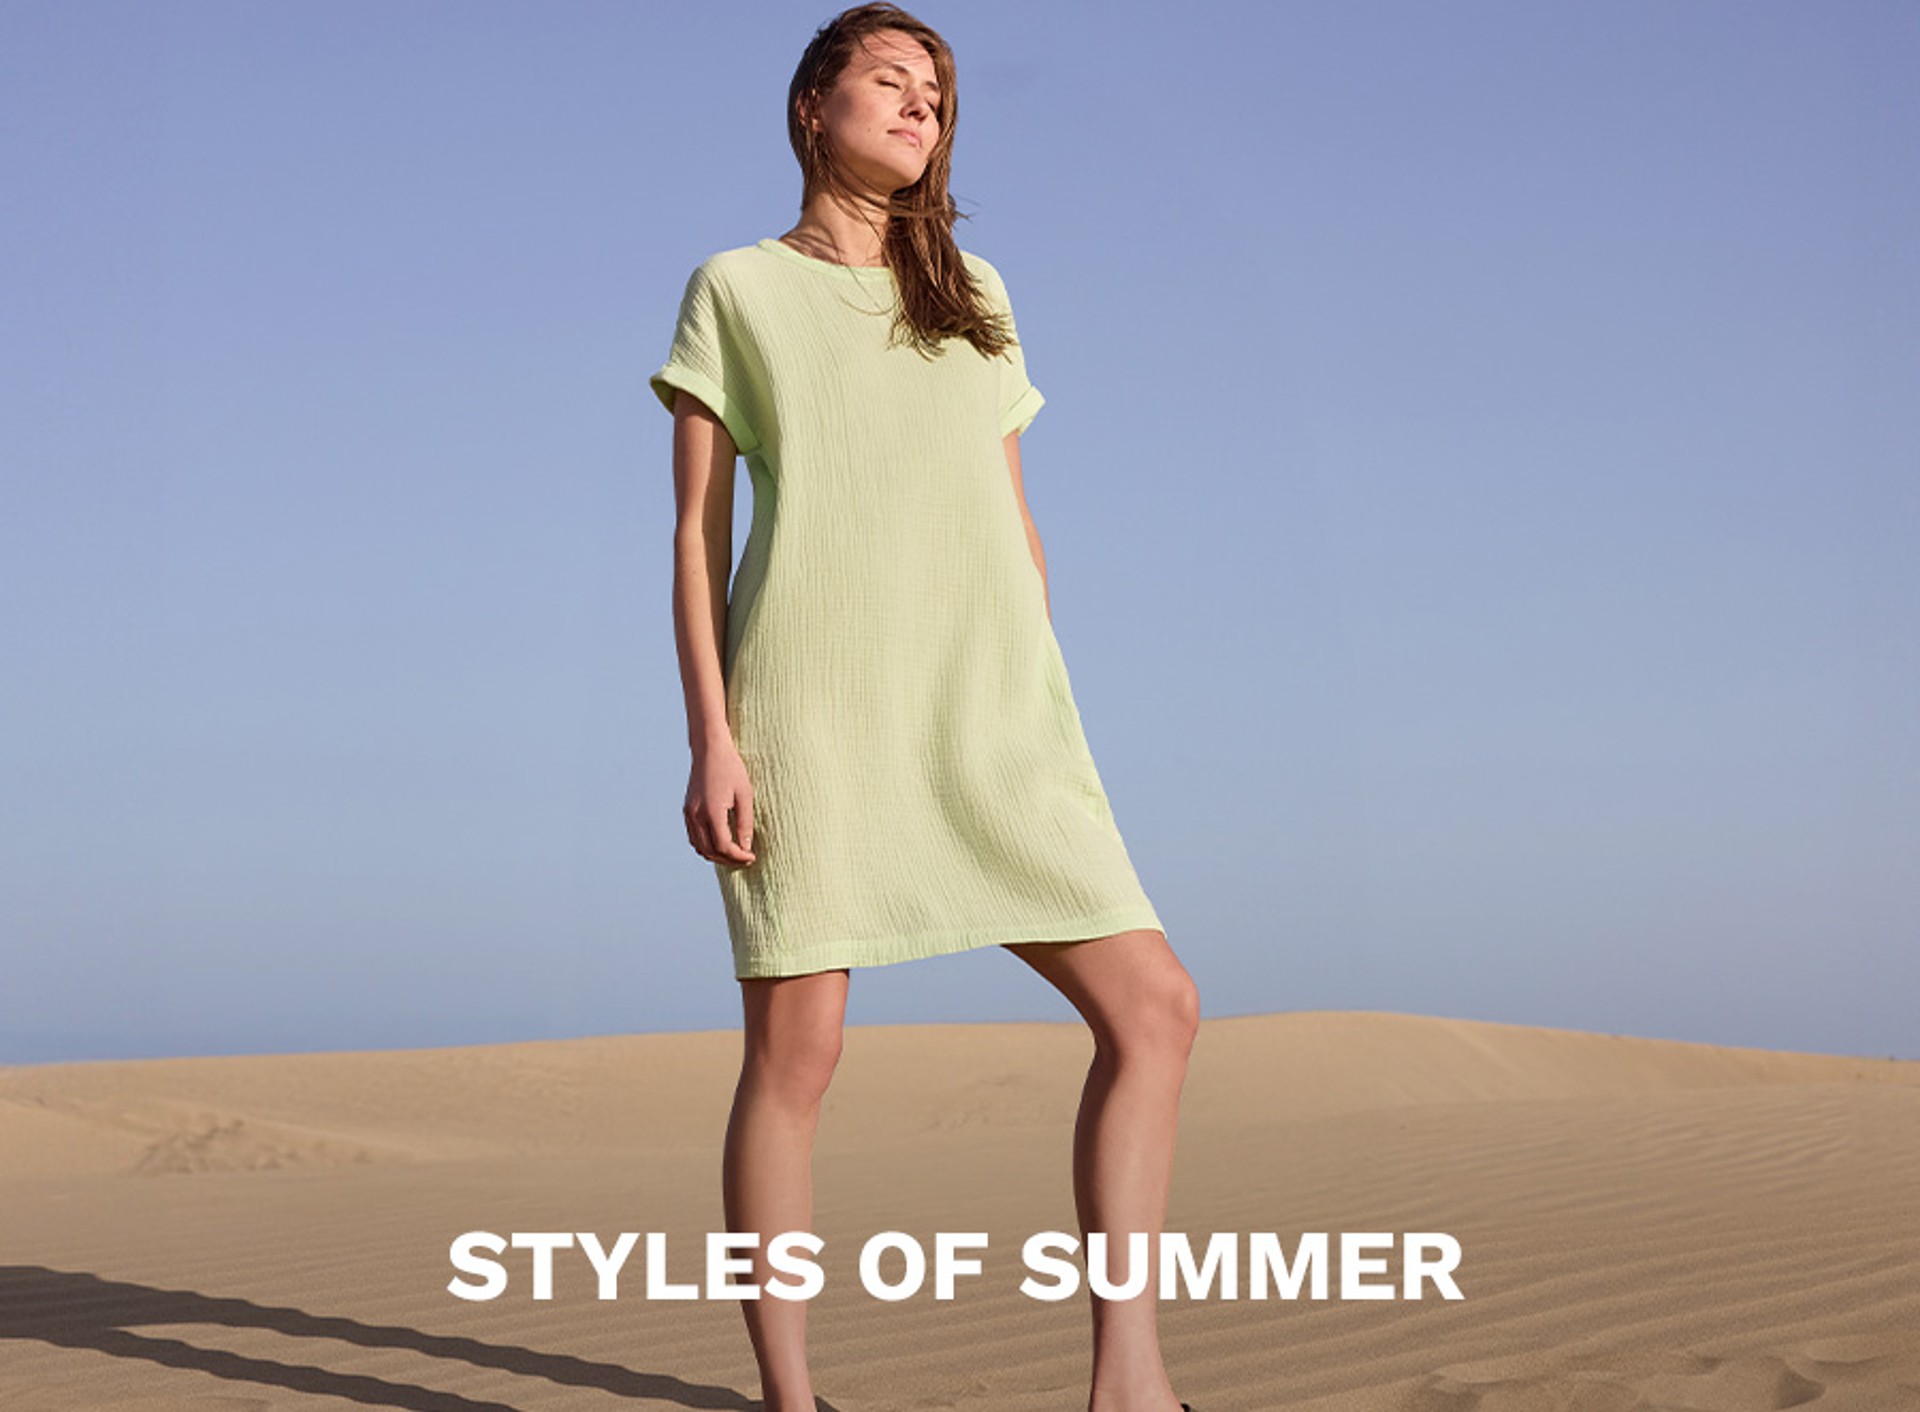 Styles of summer